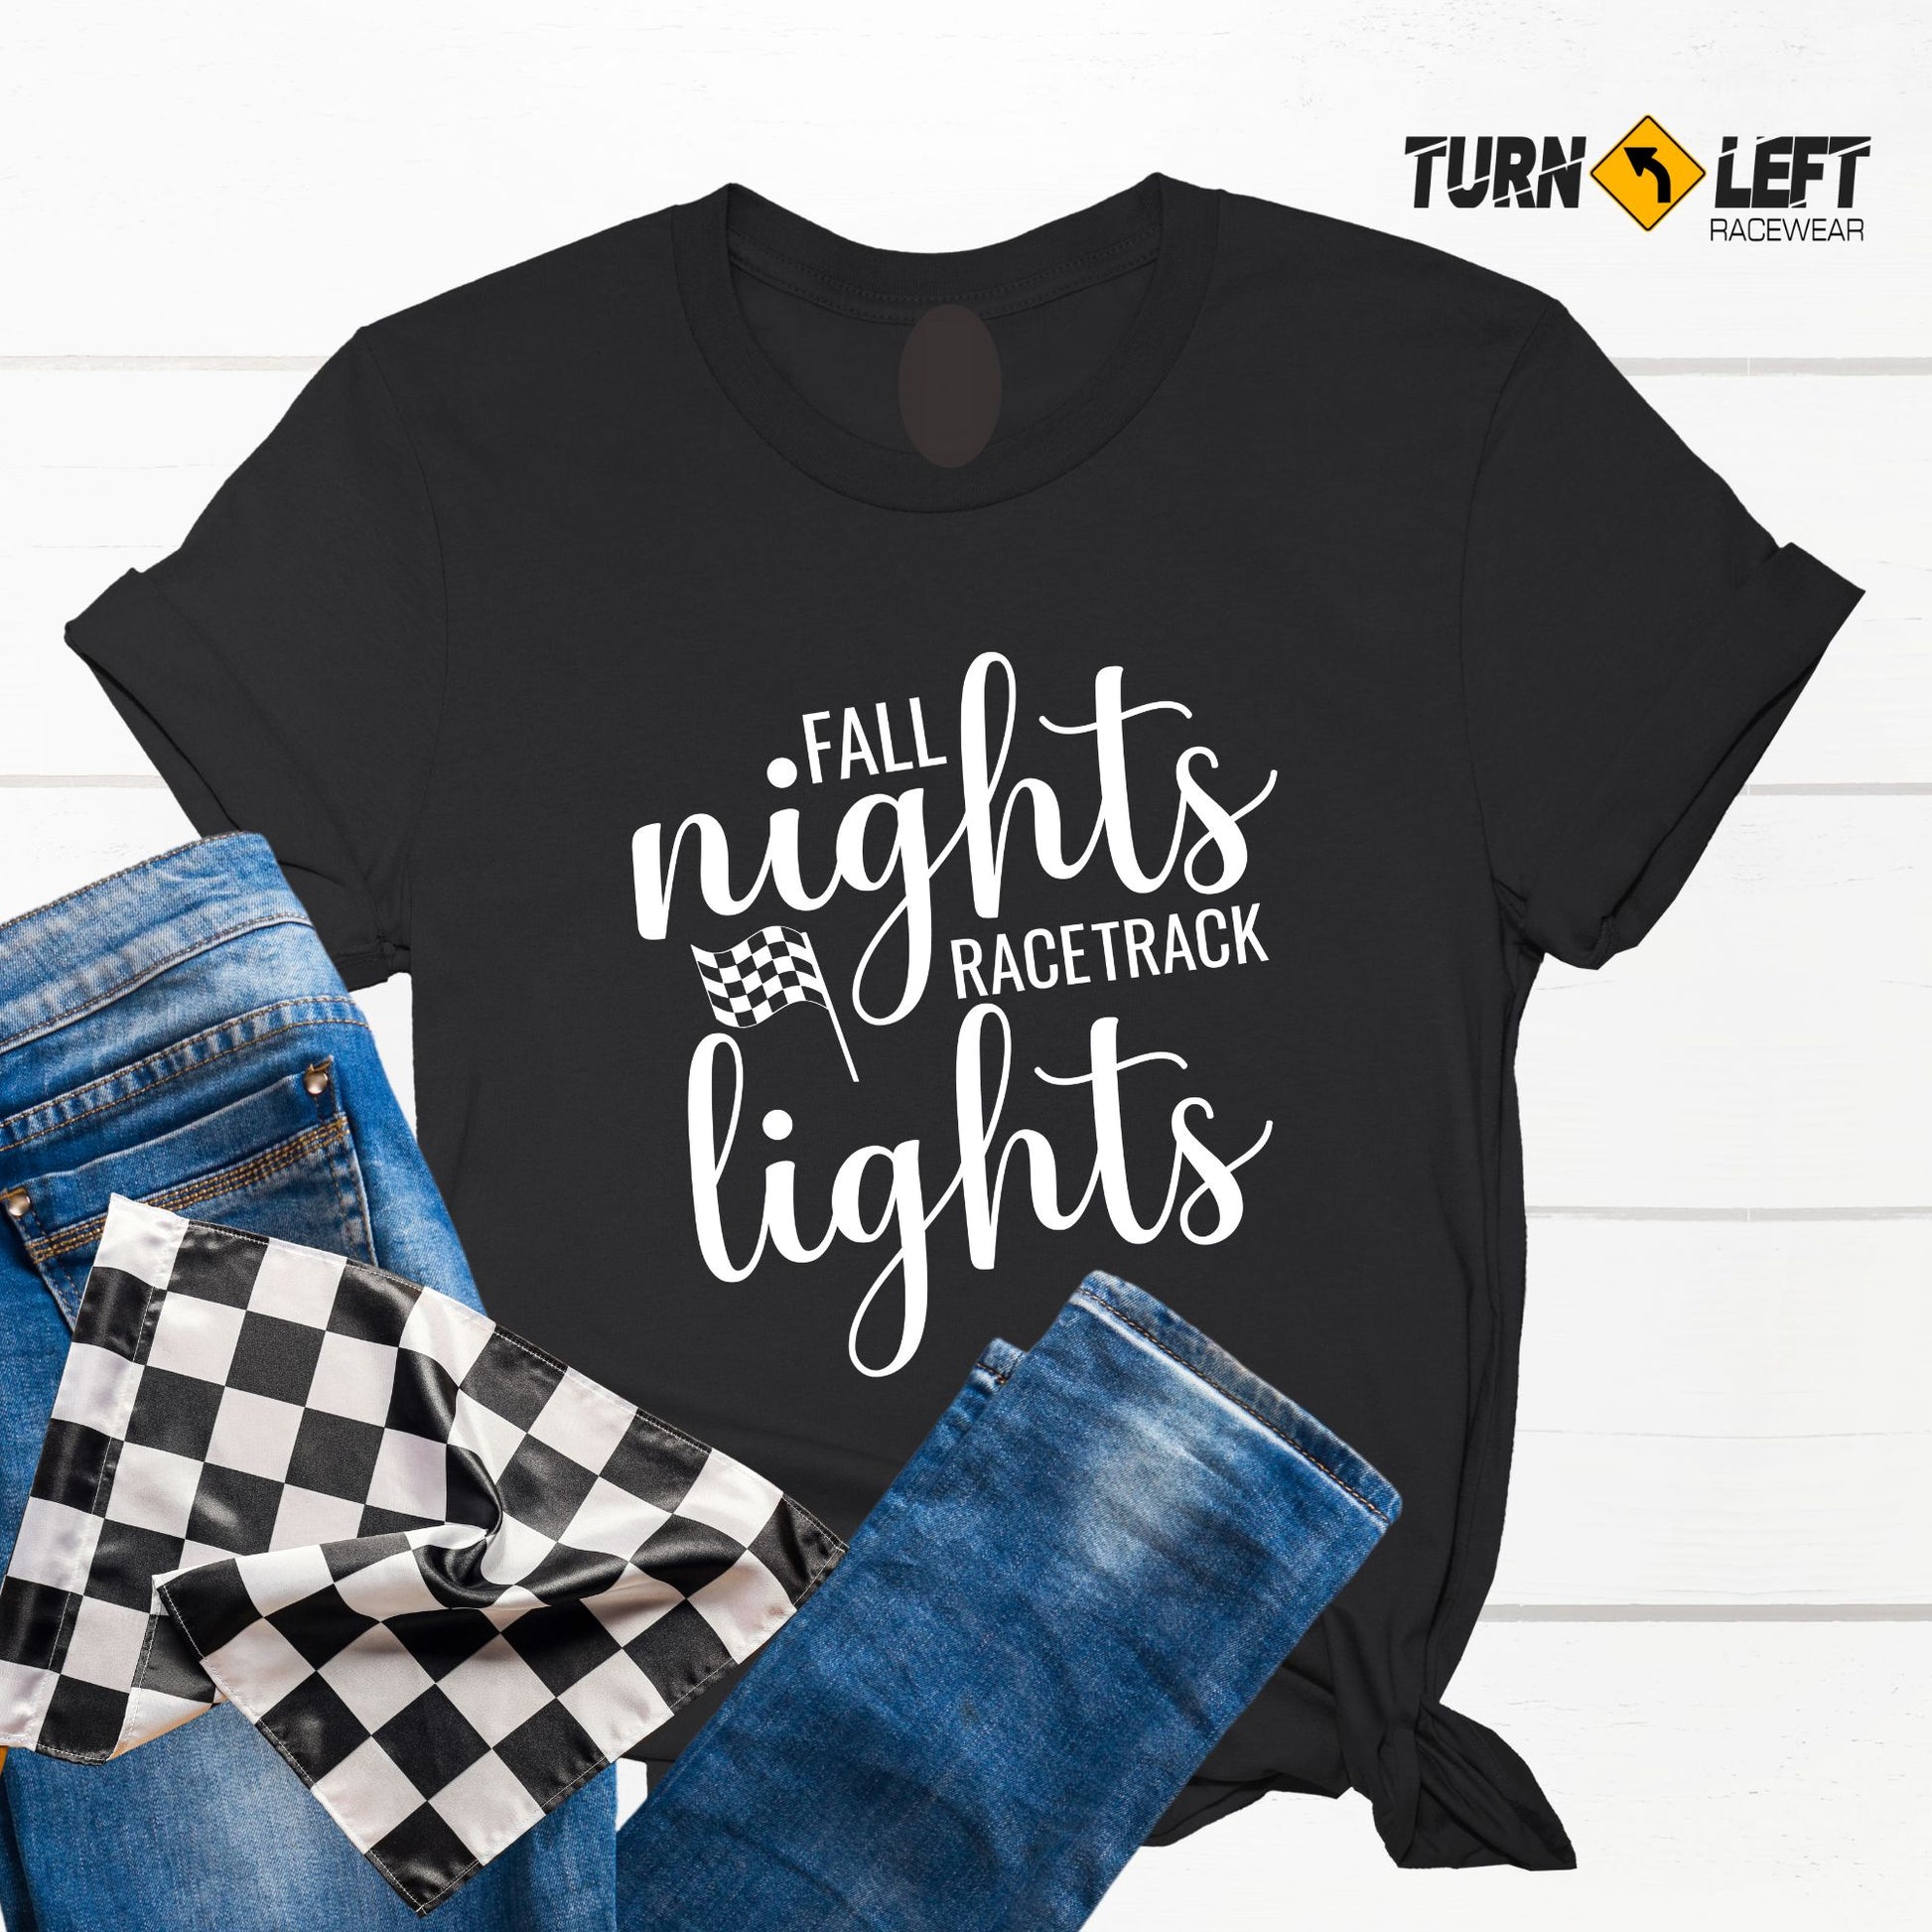 Womens racing quote t-shirts. Fall Nights Racetrack Lights . Dirt Track Racing Shirts for Women, Drag Racing t-shirts. Racing sayings. 